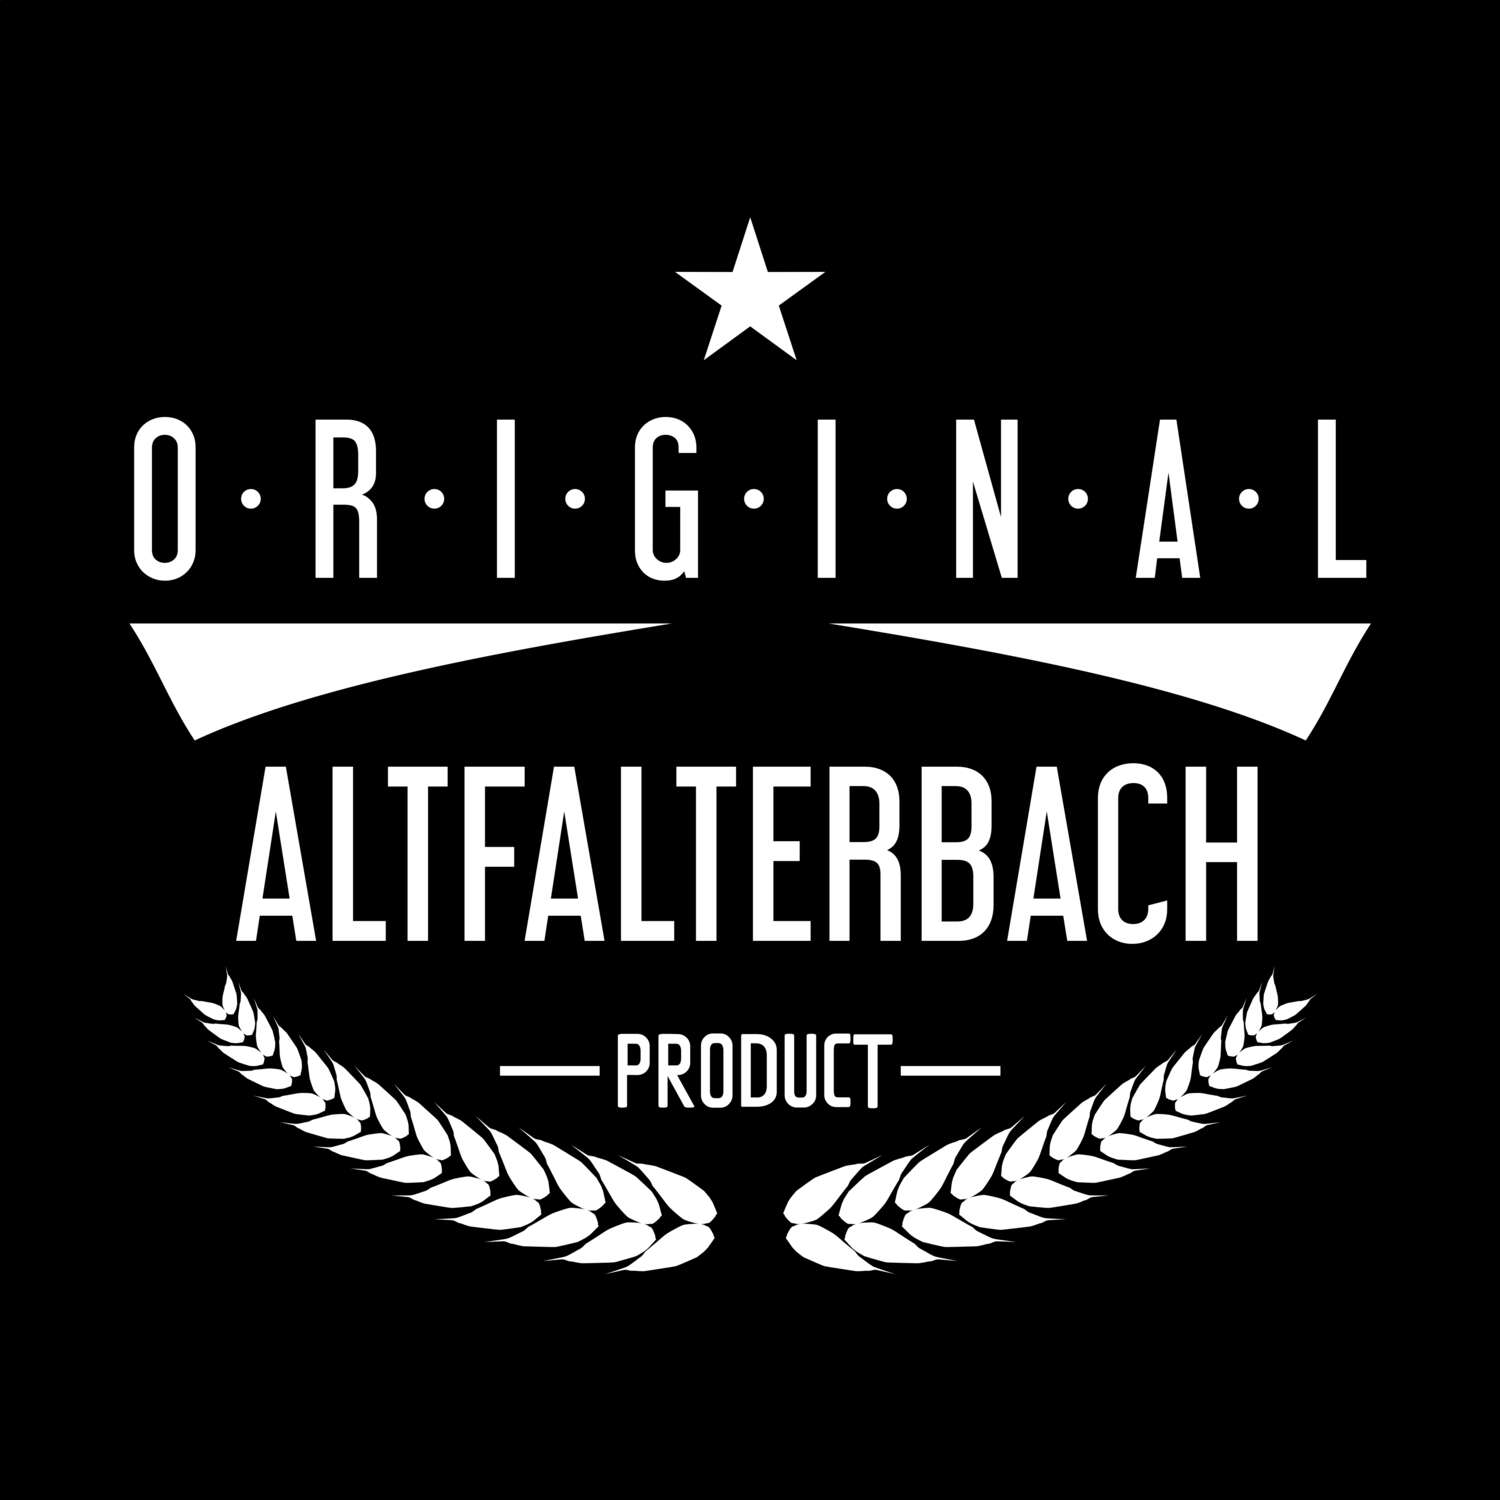 Altfalterbach T-Shirt »Original Product«